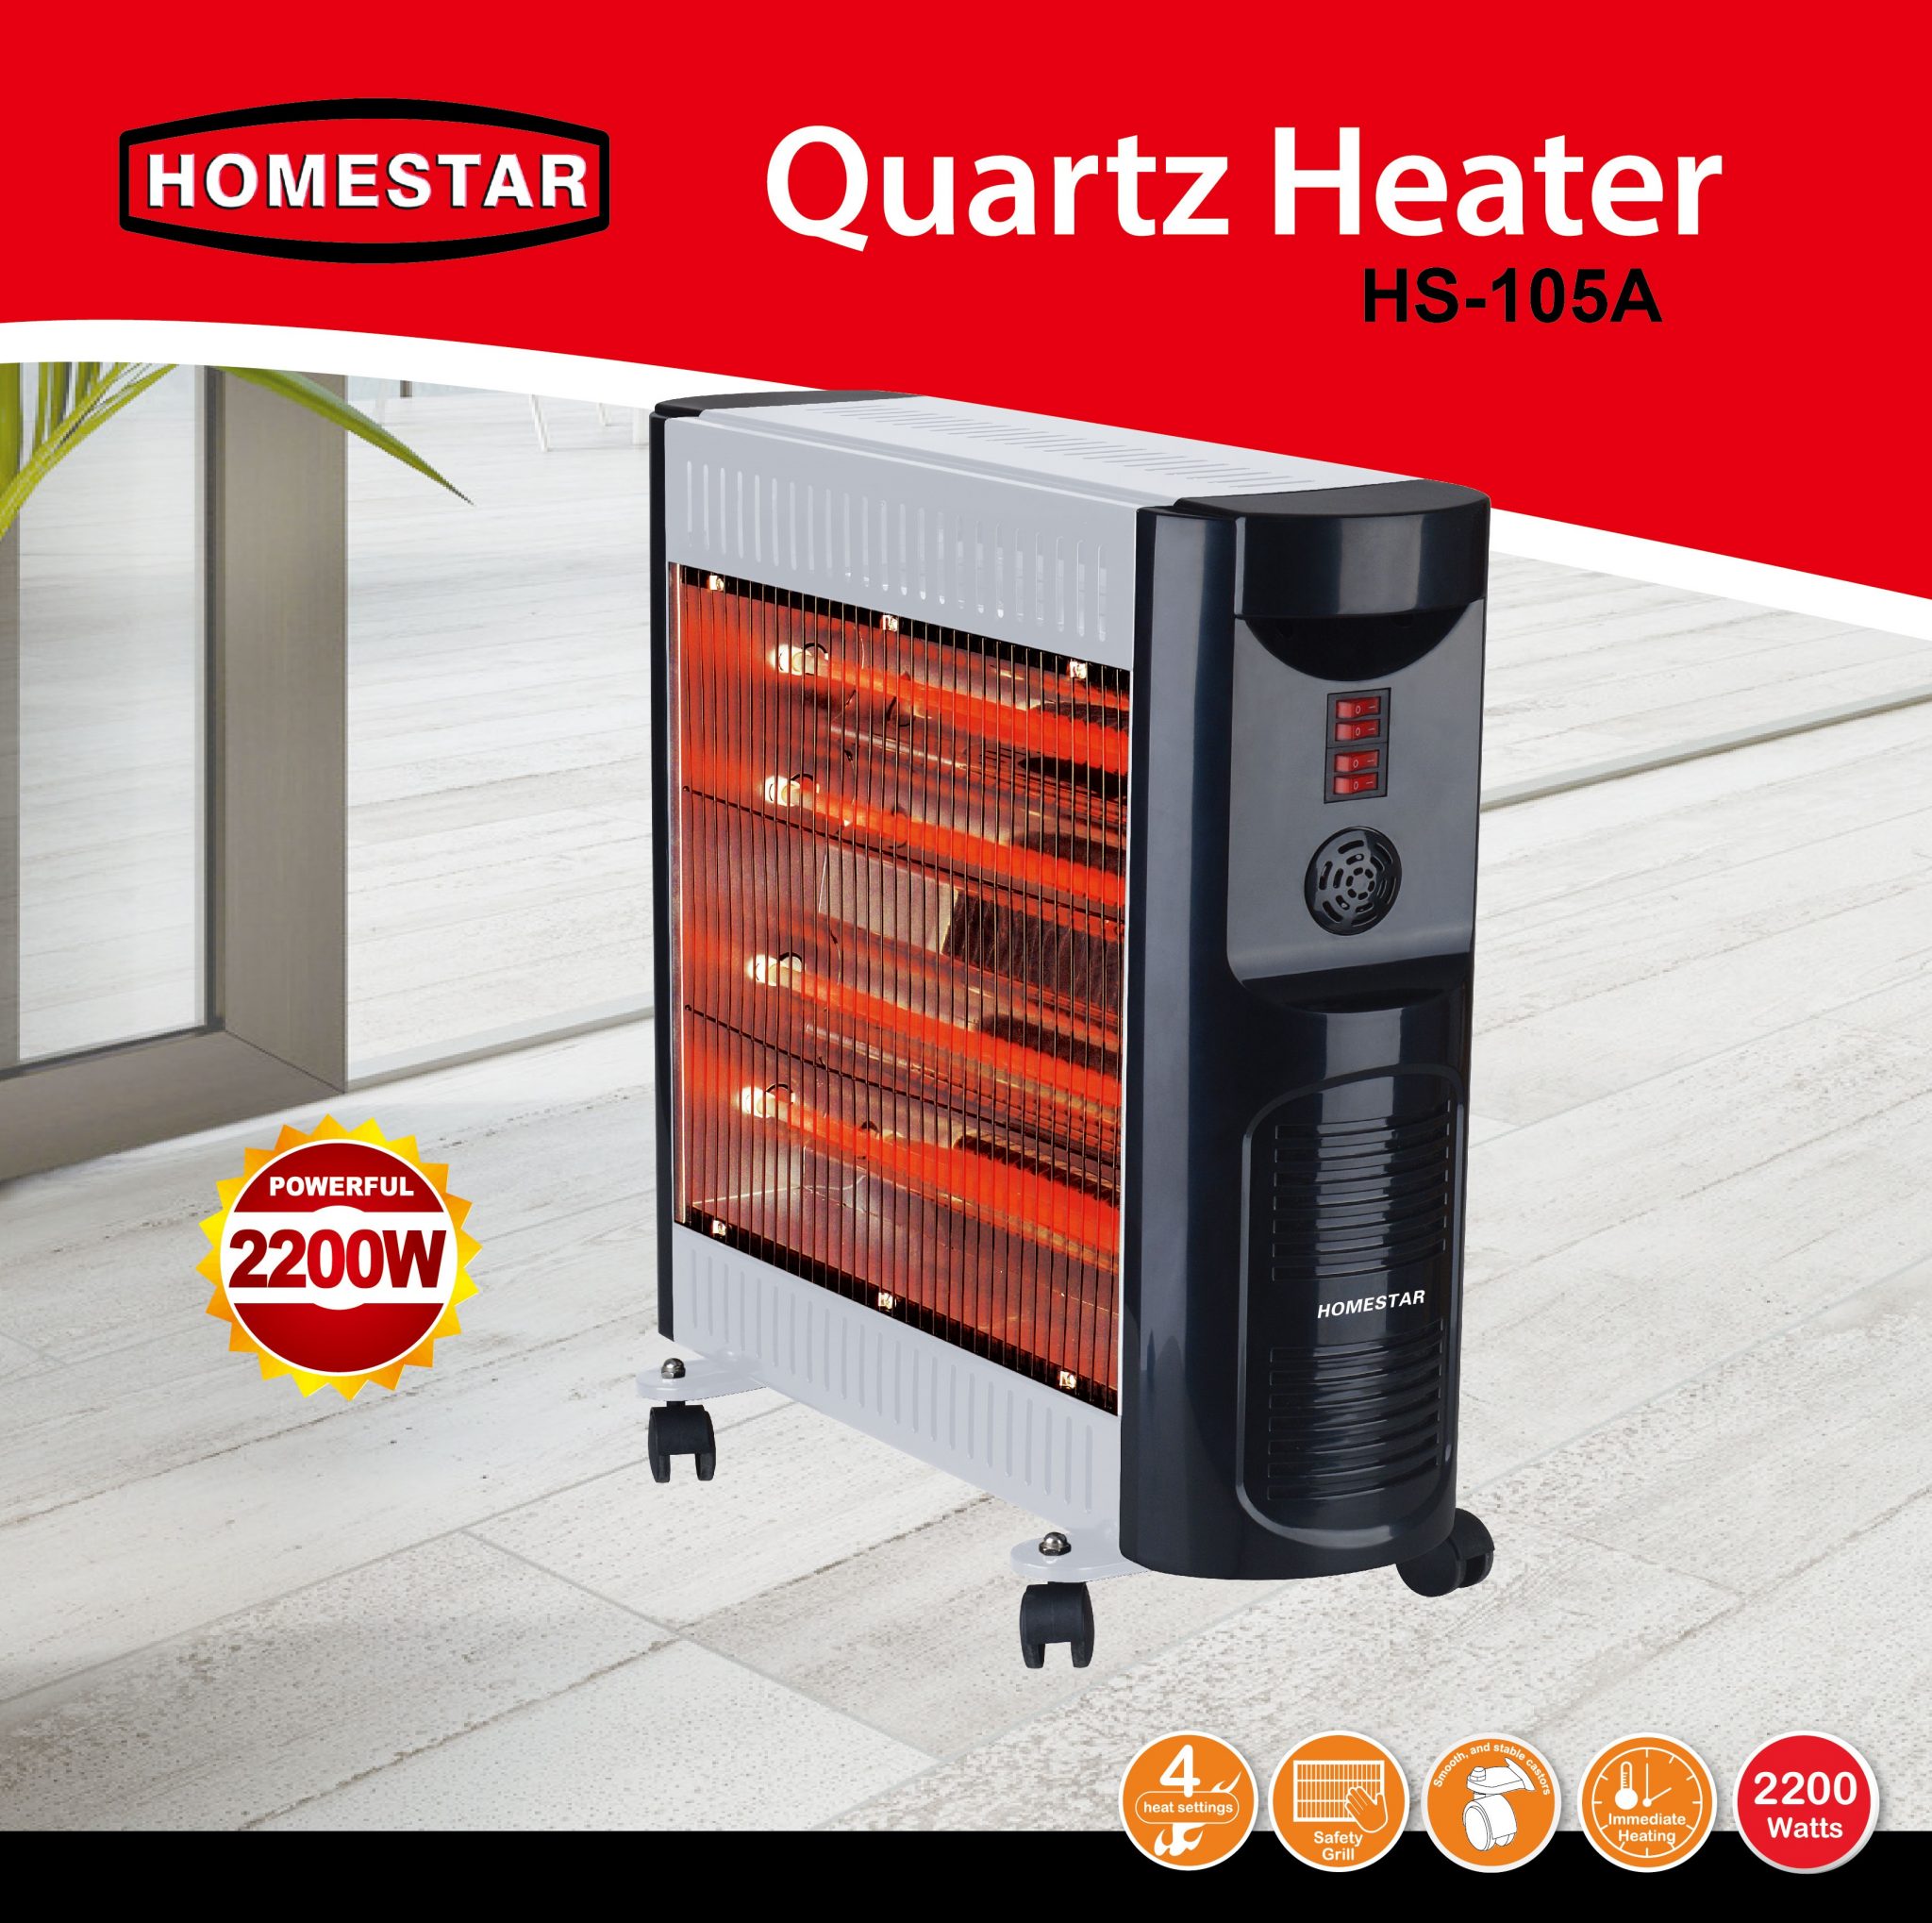 HS-104 4 Bar Ceramic Heater - Home Star